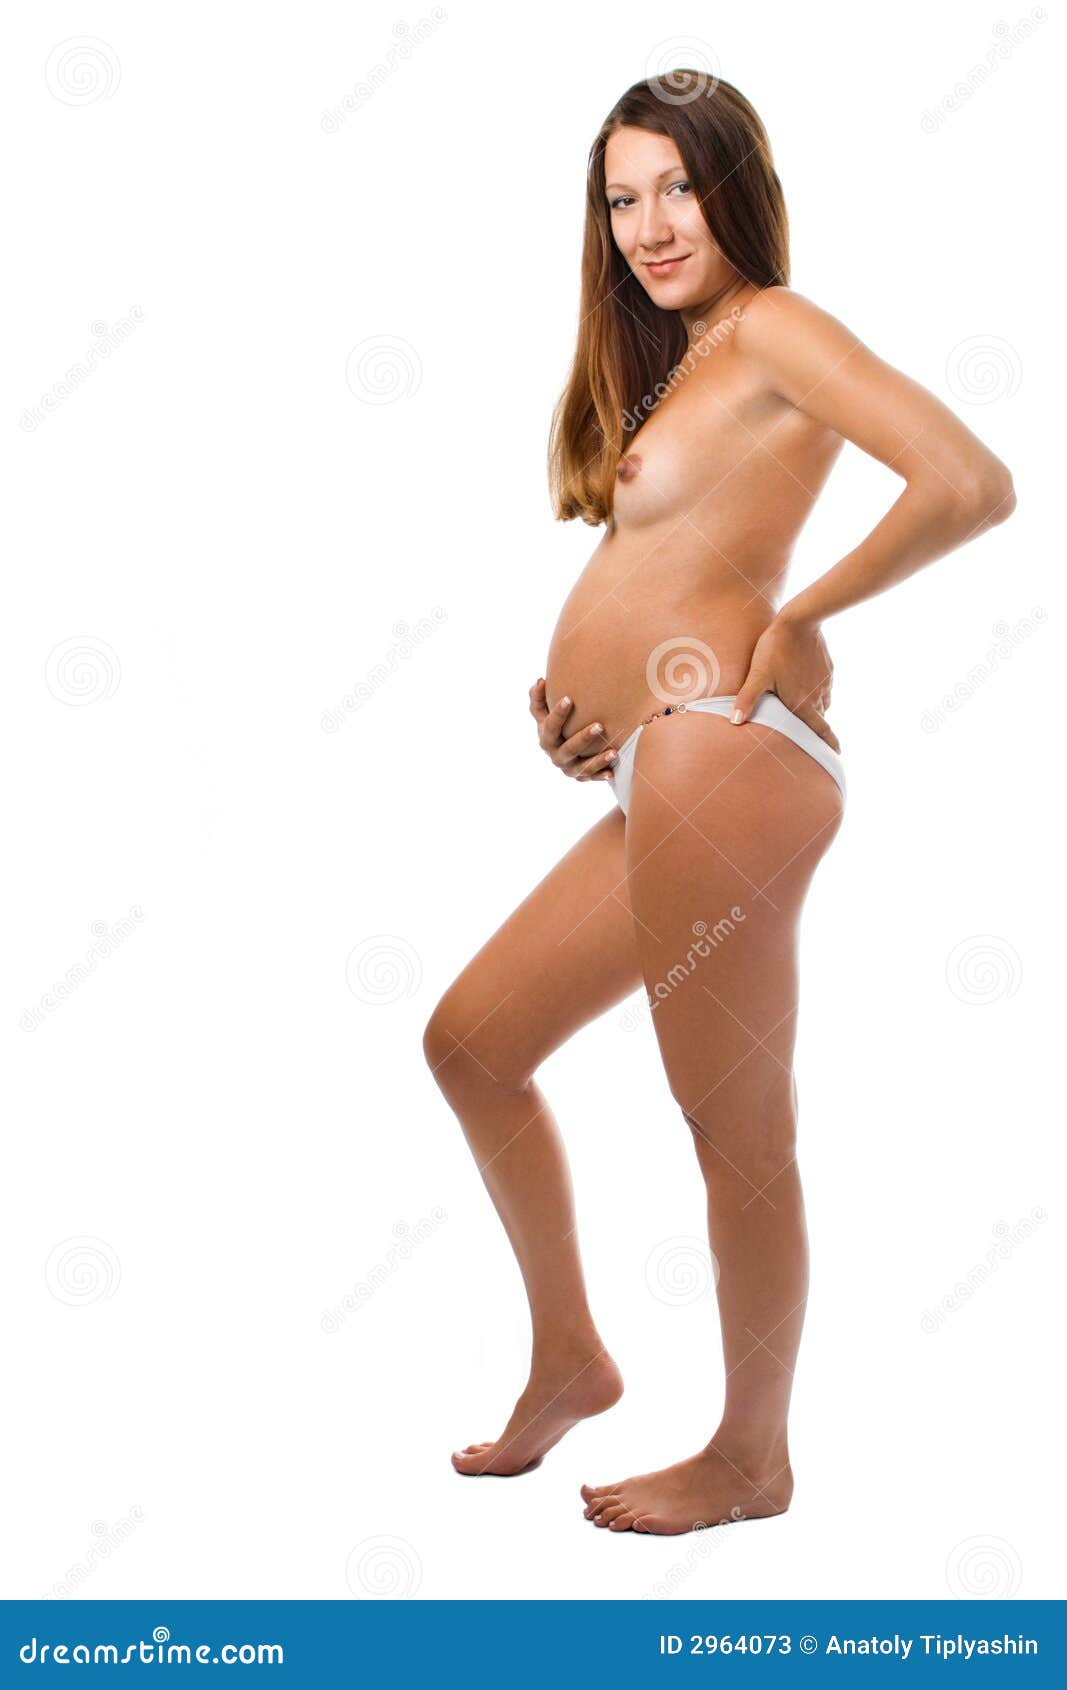 Nude Pics Of Women 85